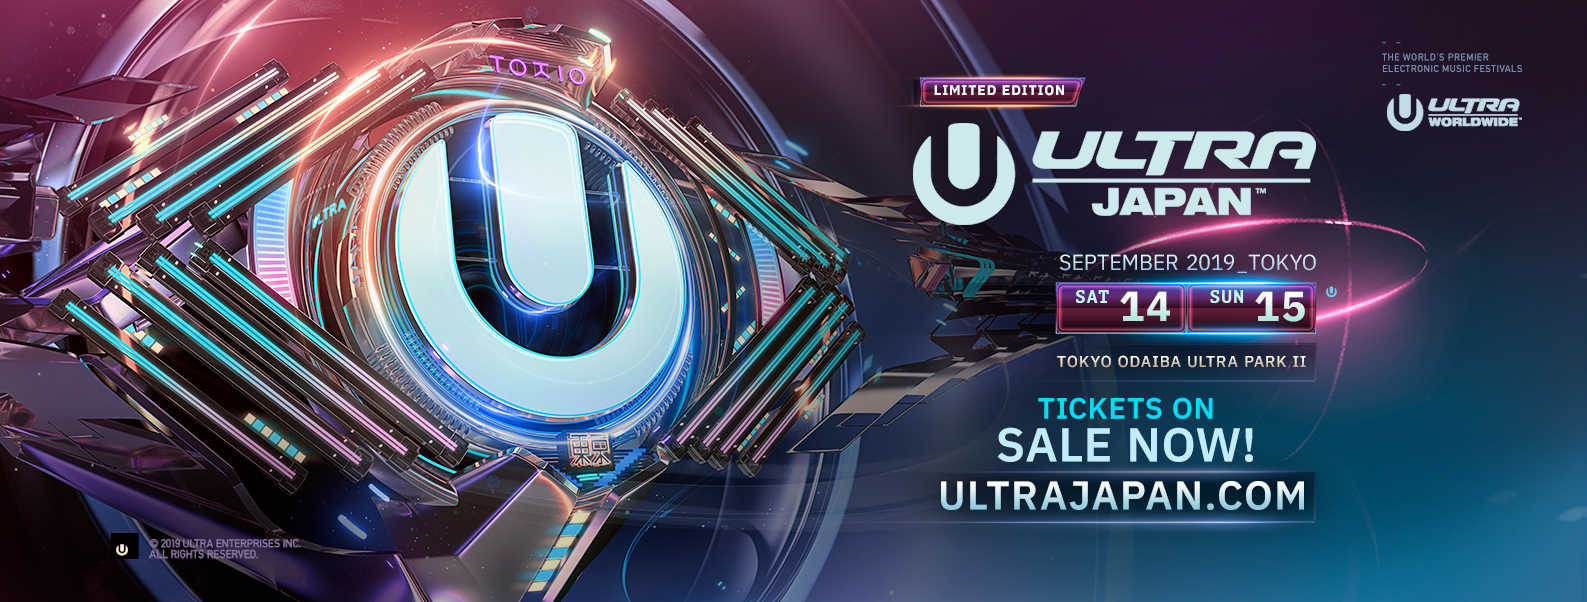 Ultra Japan 19 今年もお台場で開催決定 5年ぶりの 2days 開催で会場も新たなレイアウトに エイベックス株式会社のプレスリリース